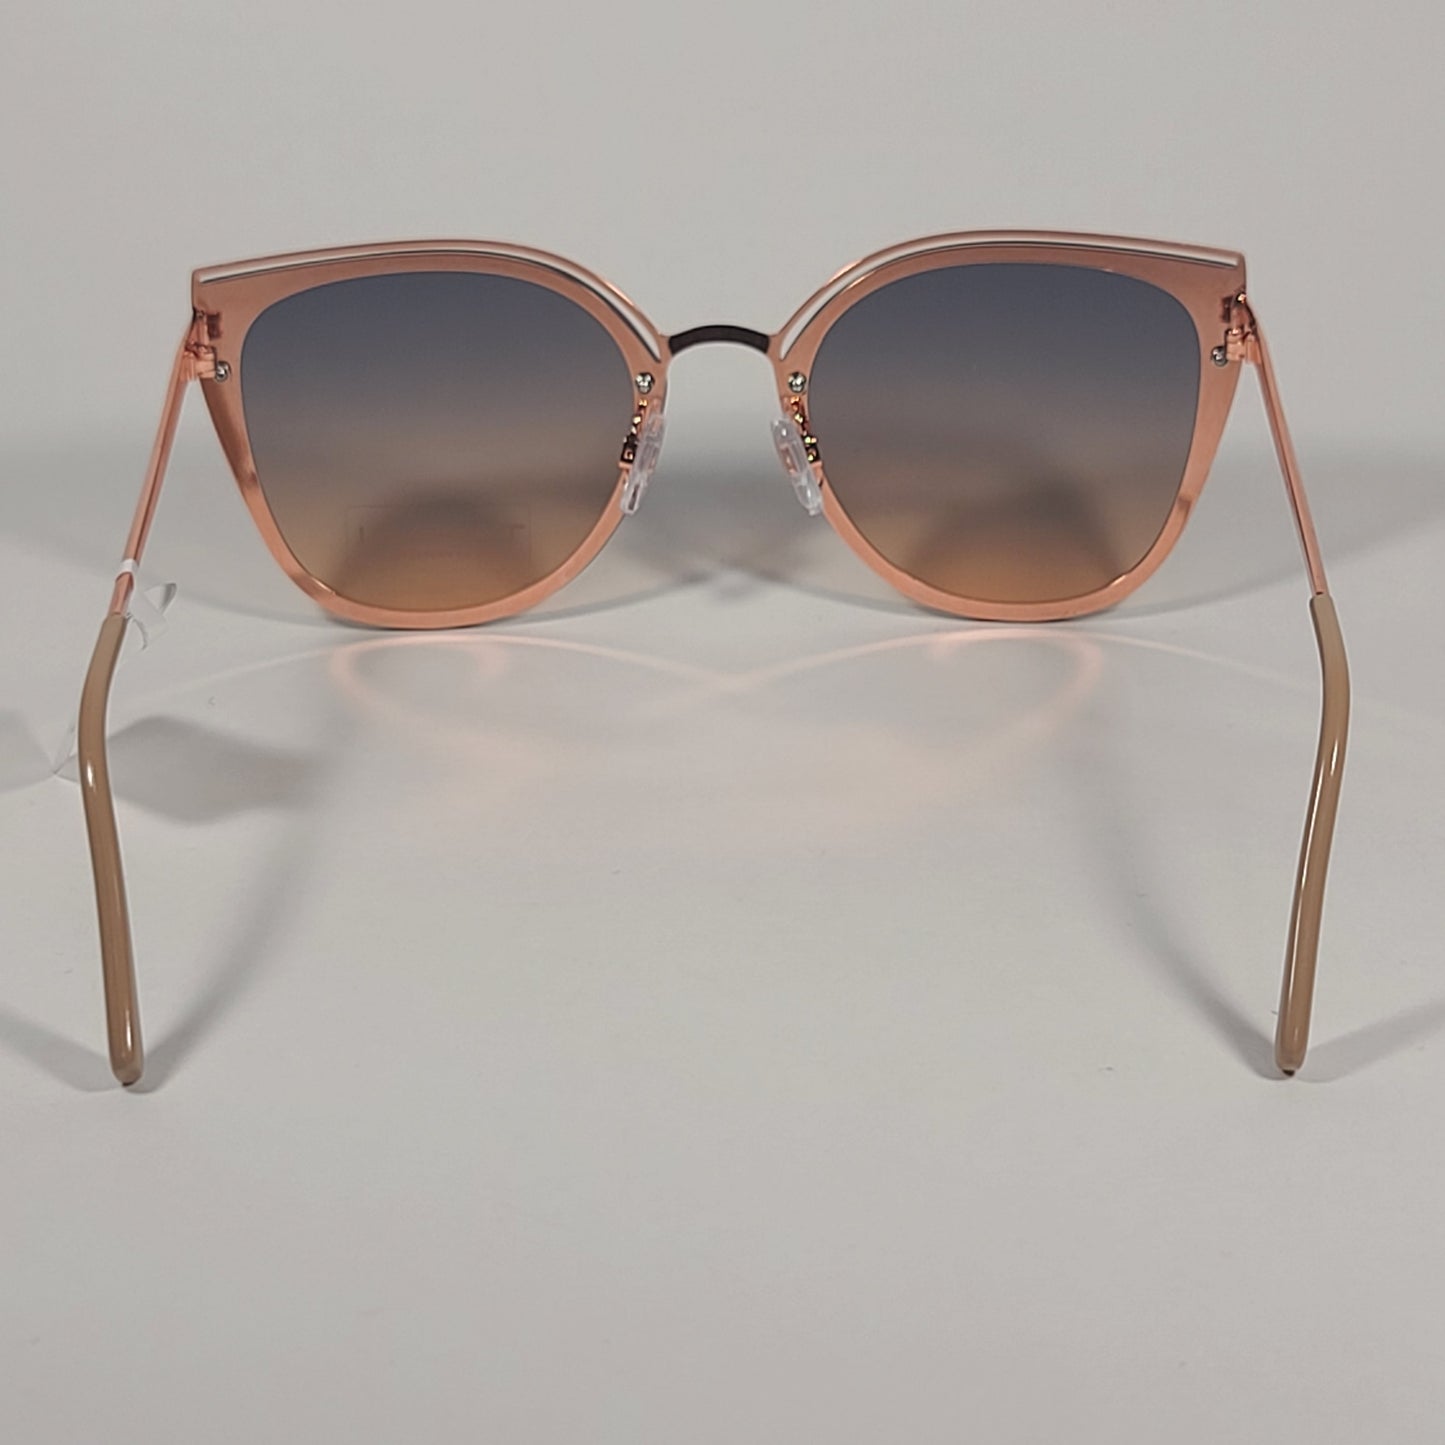 Tahari Rimless Cat Eye Sunglasses Rose Gold Nude Frame Gradient Lens TH809 RGDND - Sunglasses